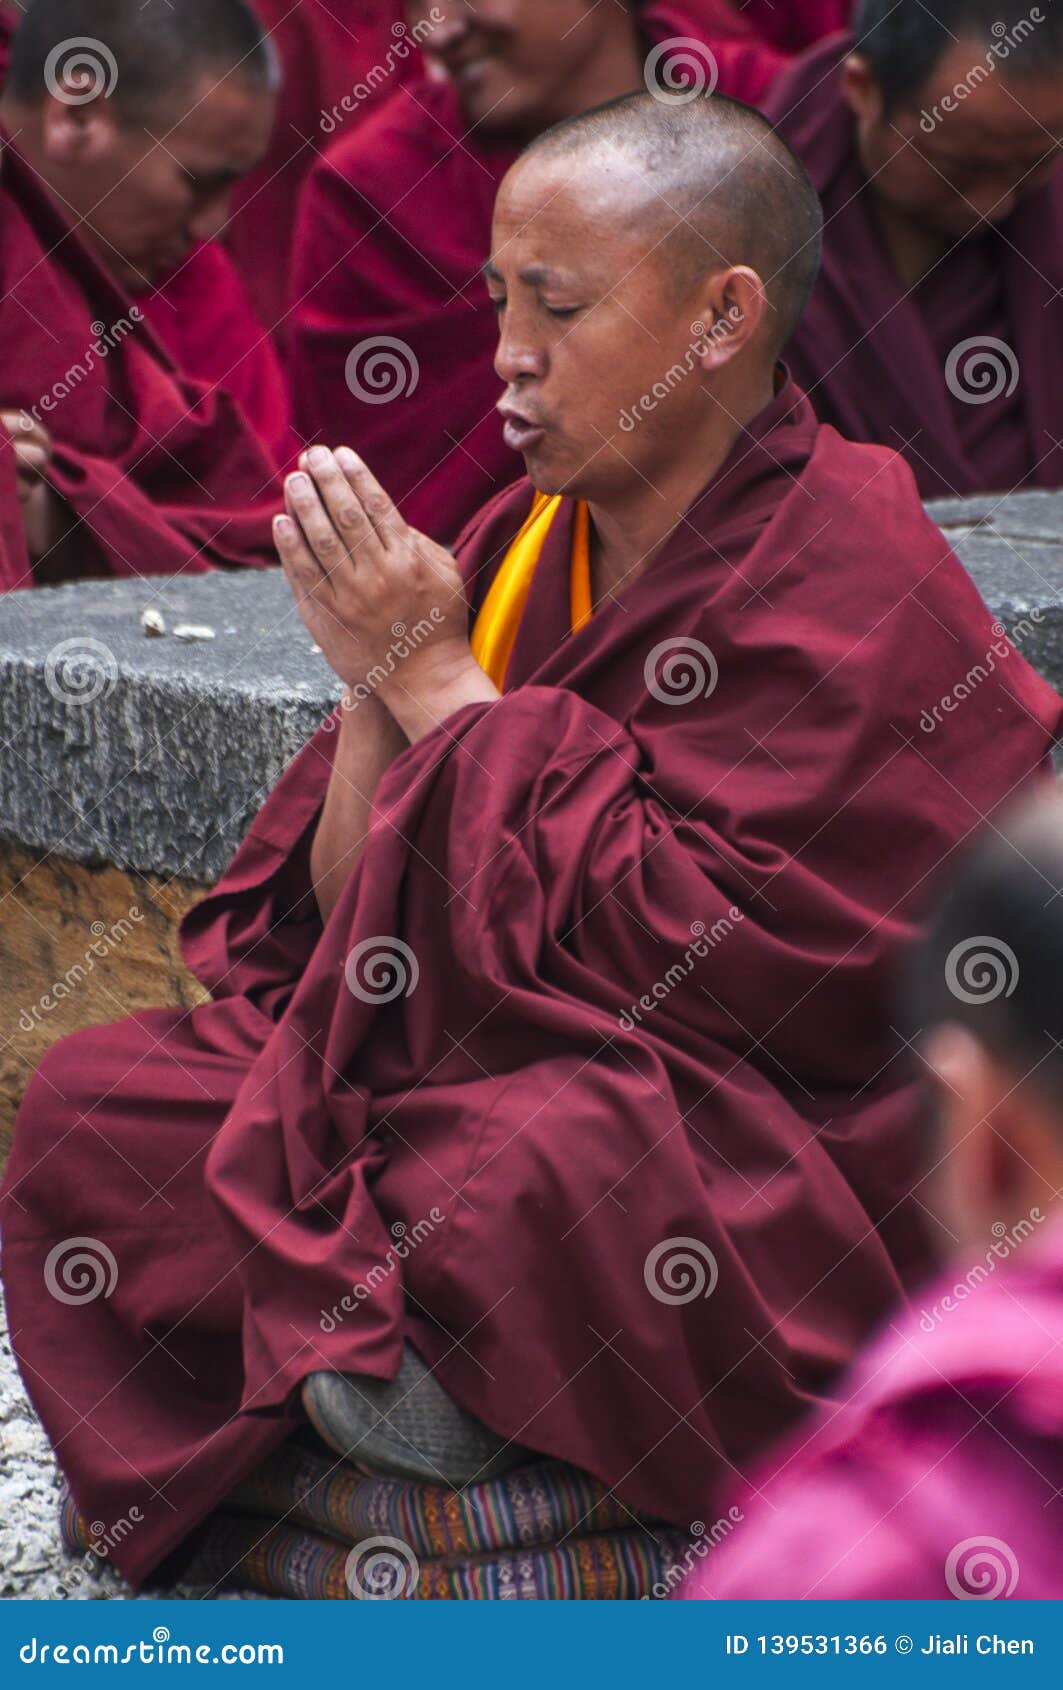 Chanting buddhist Buddhist meditation